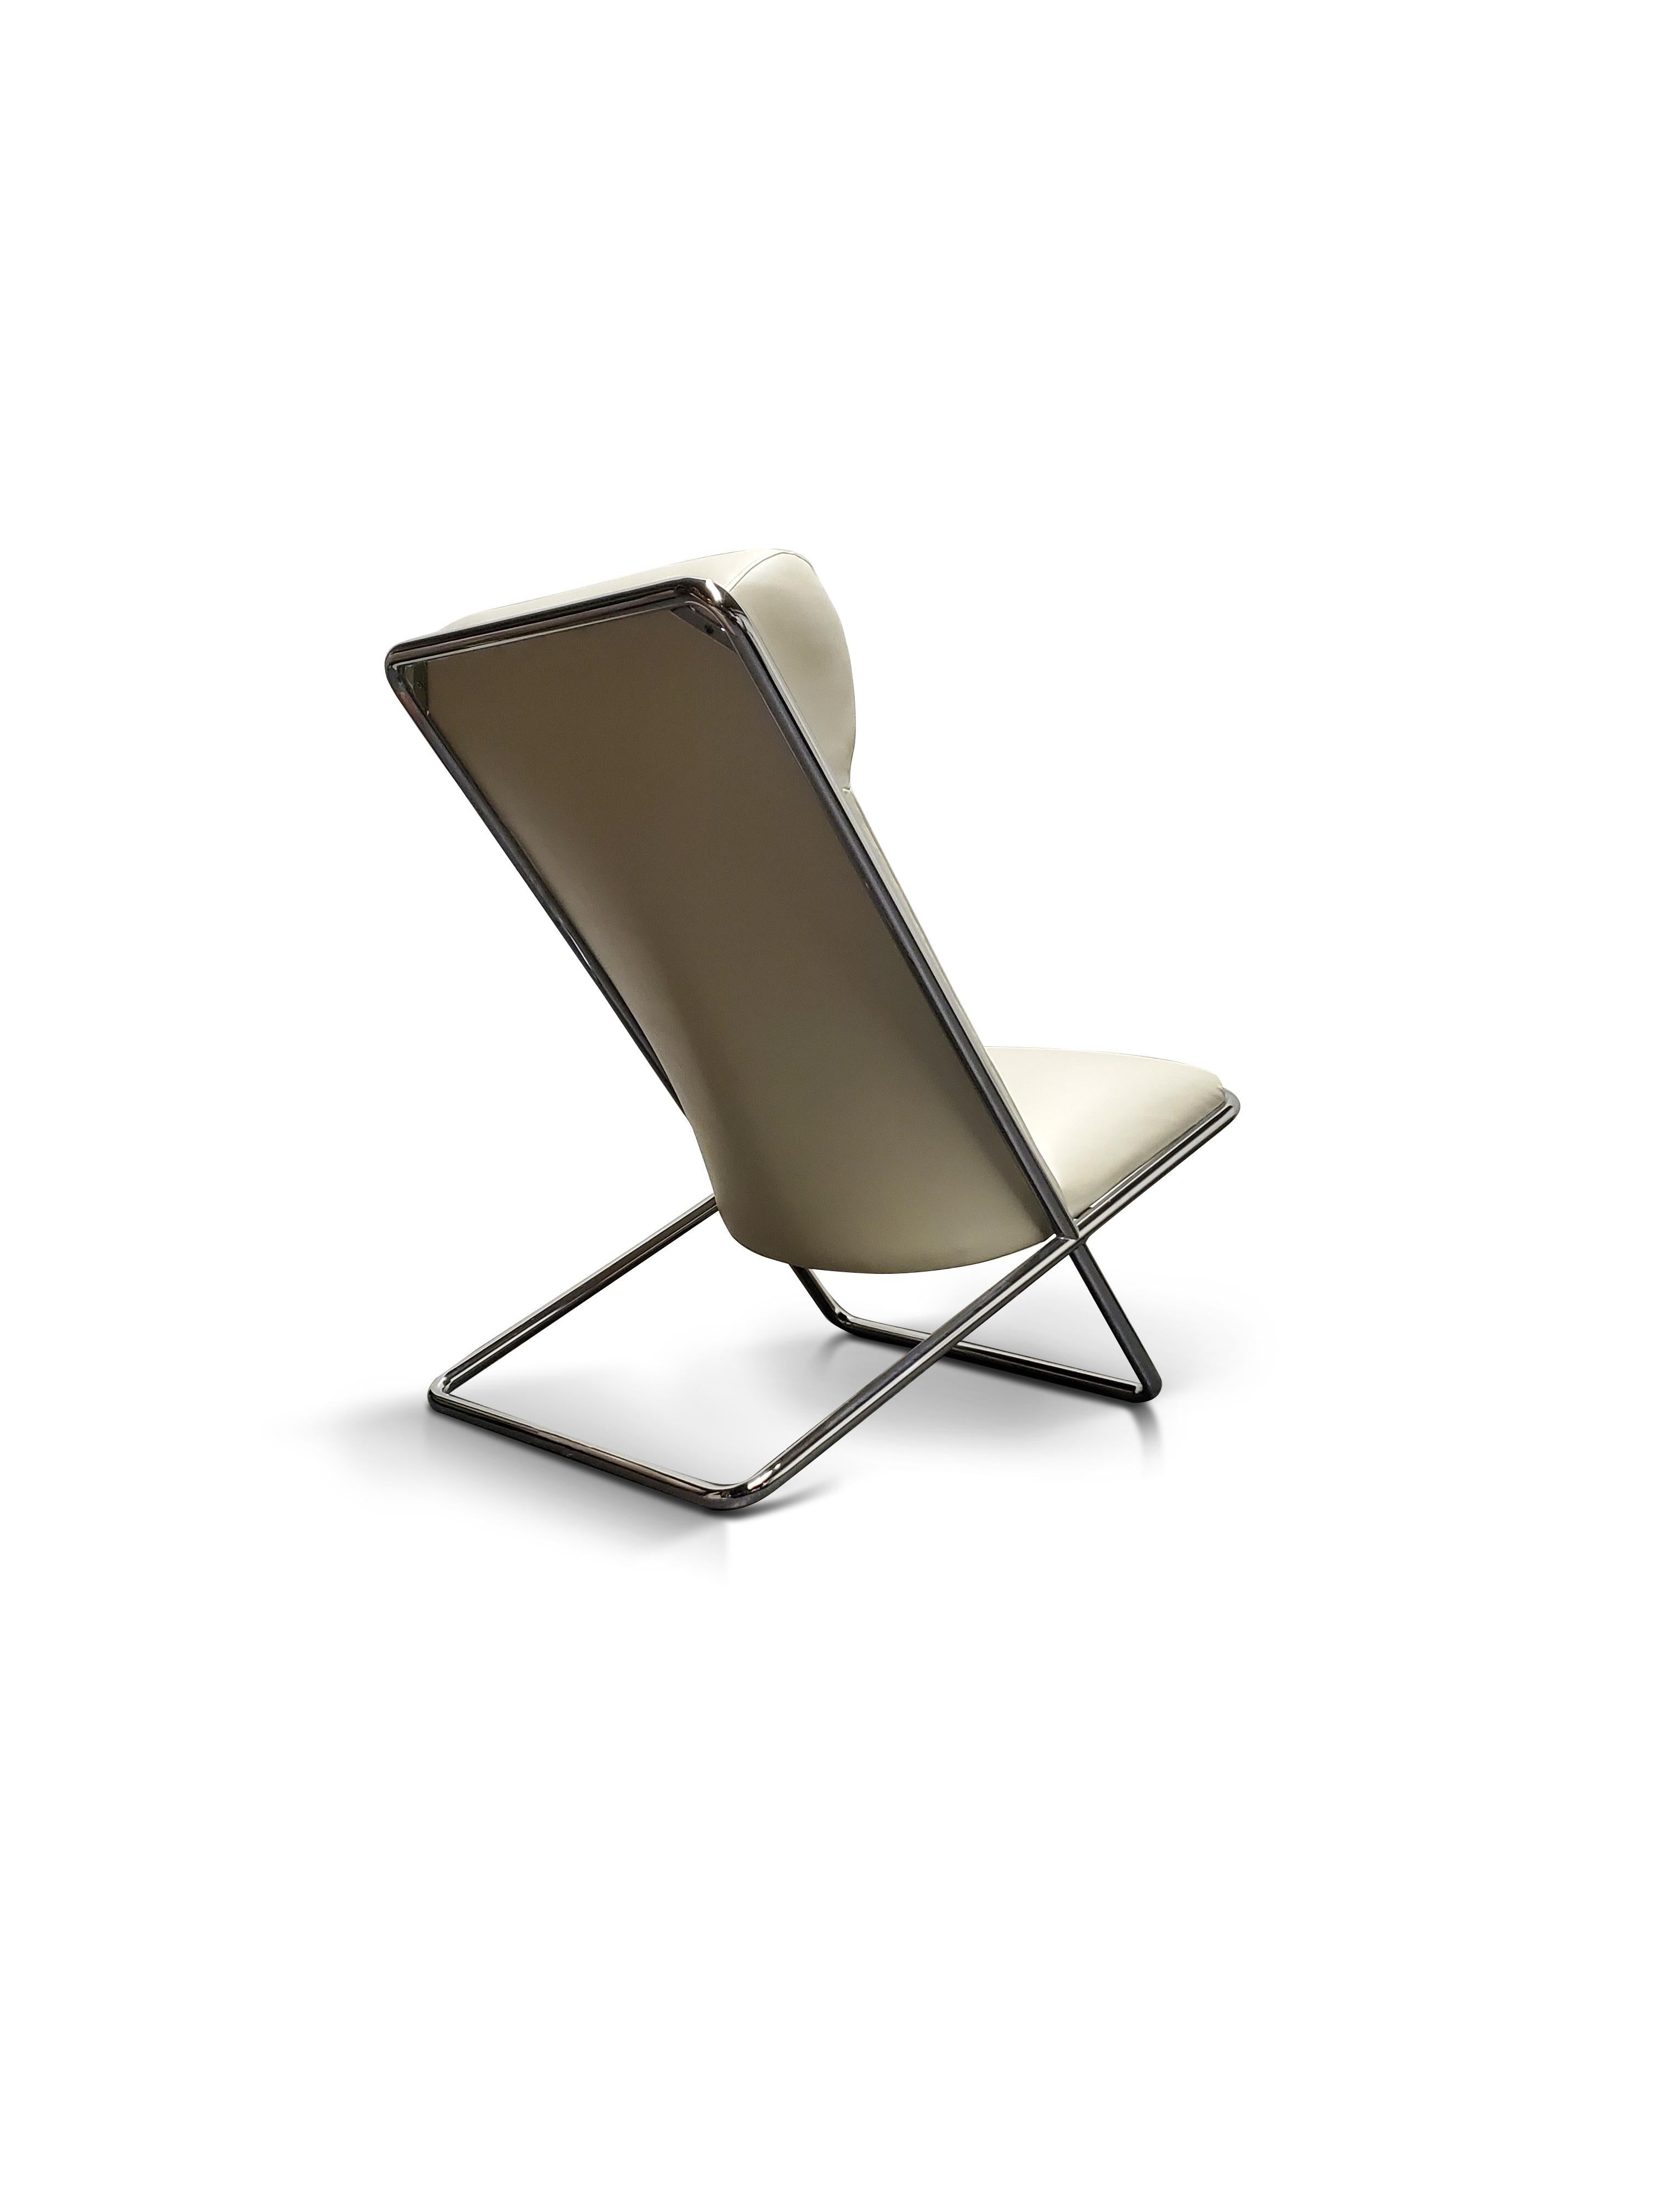 Ward Bennett Scissor Lounge Chair  For Sale 1